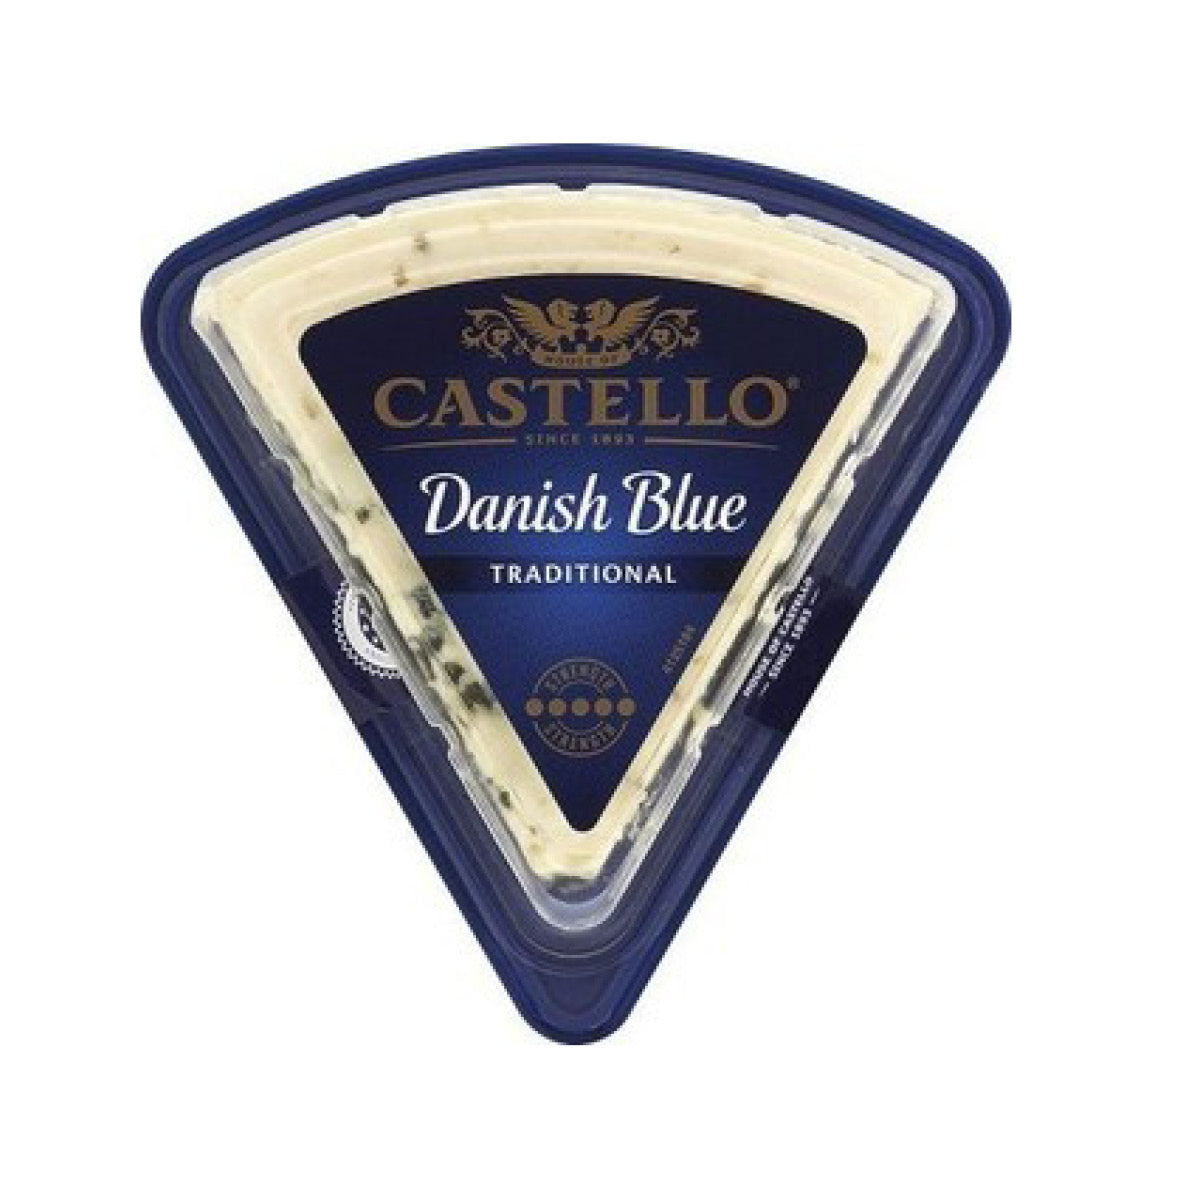 Castello Danish Blue Cheese Extra Creamy, 125g